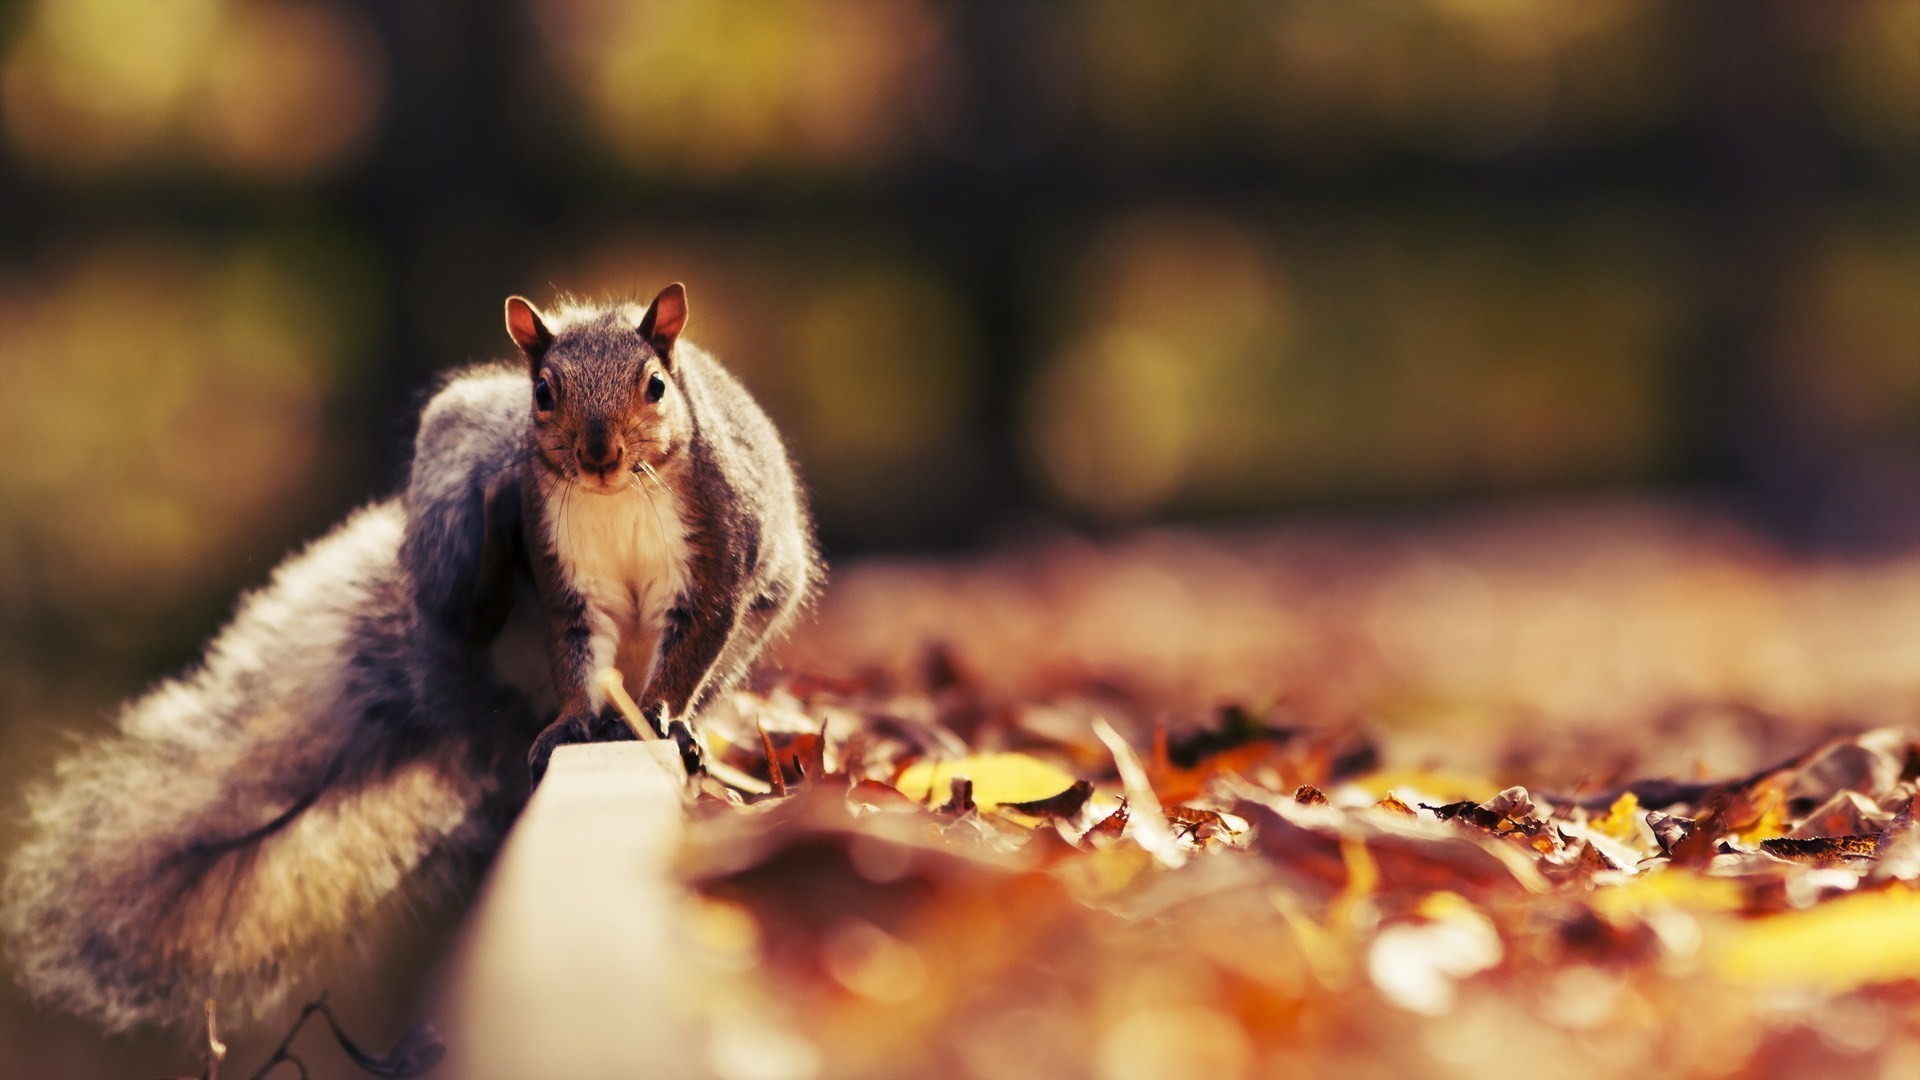 Cute squirrel - Squirrels & Animals Background Wallpapers on Desktop Nexus  (Image 1192799)